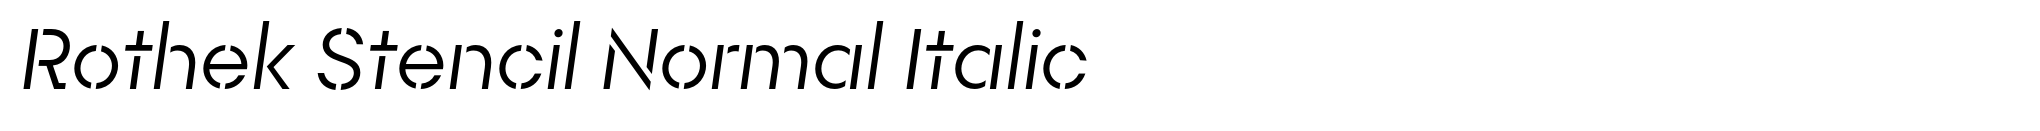 Rothek Stencil Normal Italic image